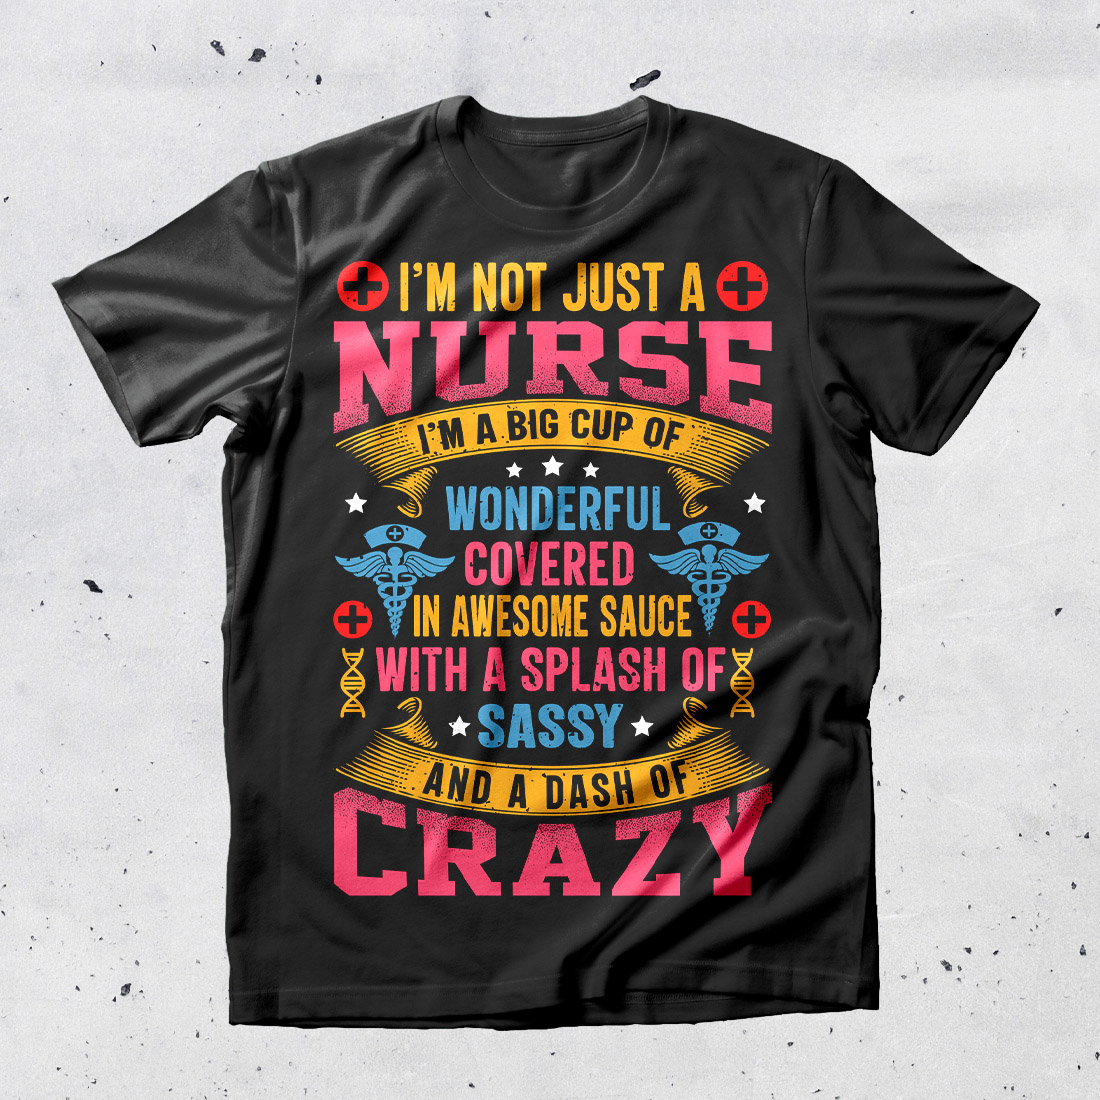 best selling nurse t-shirt Design preview image.